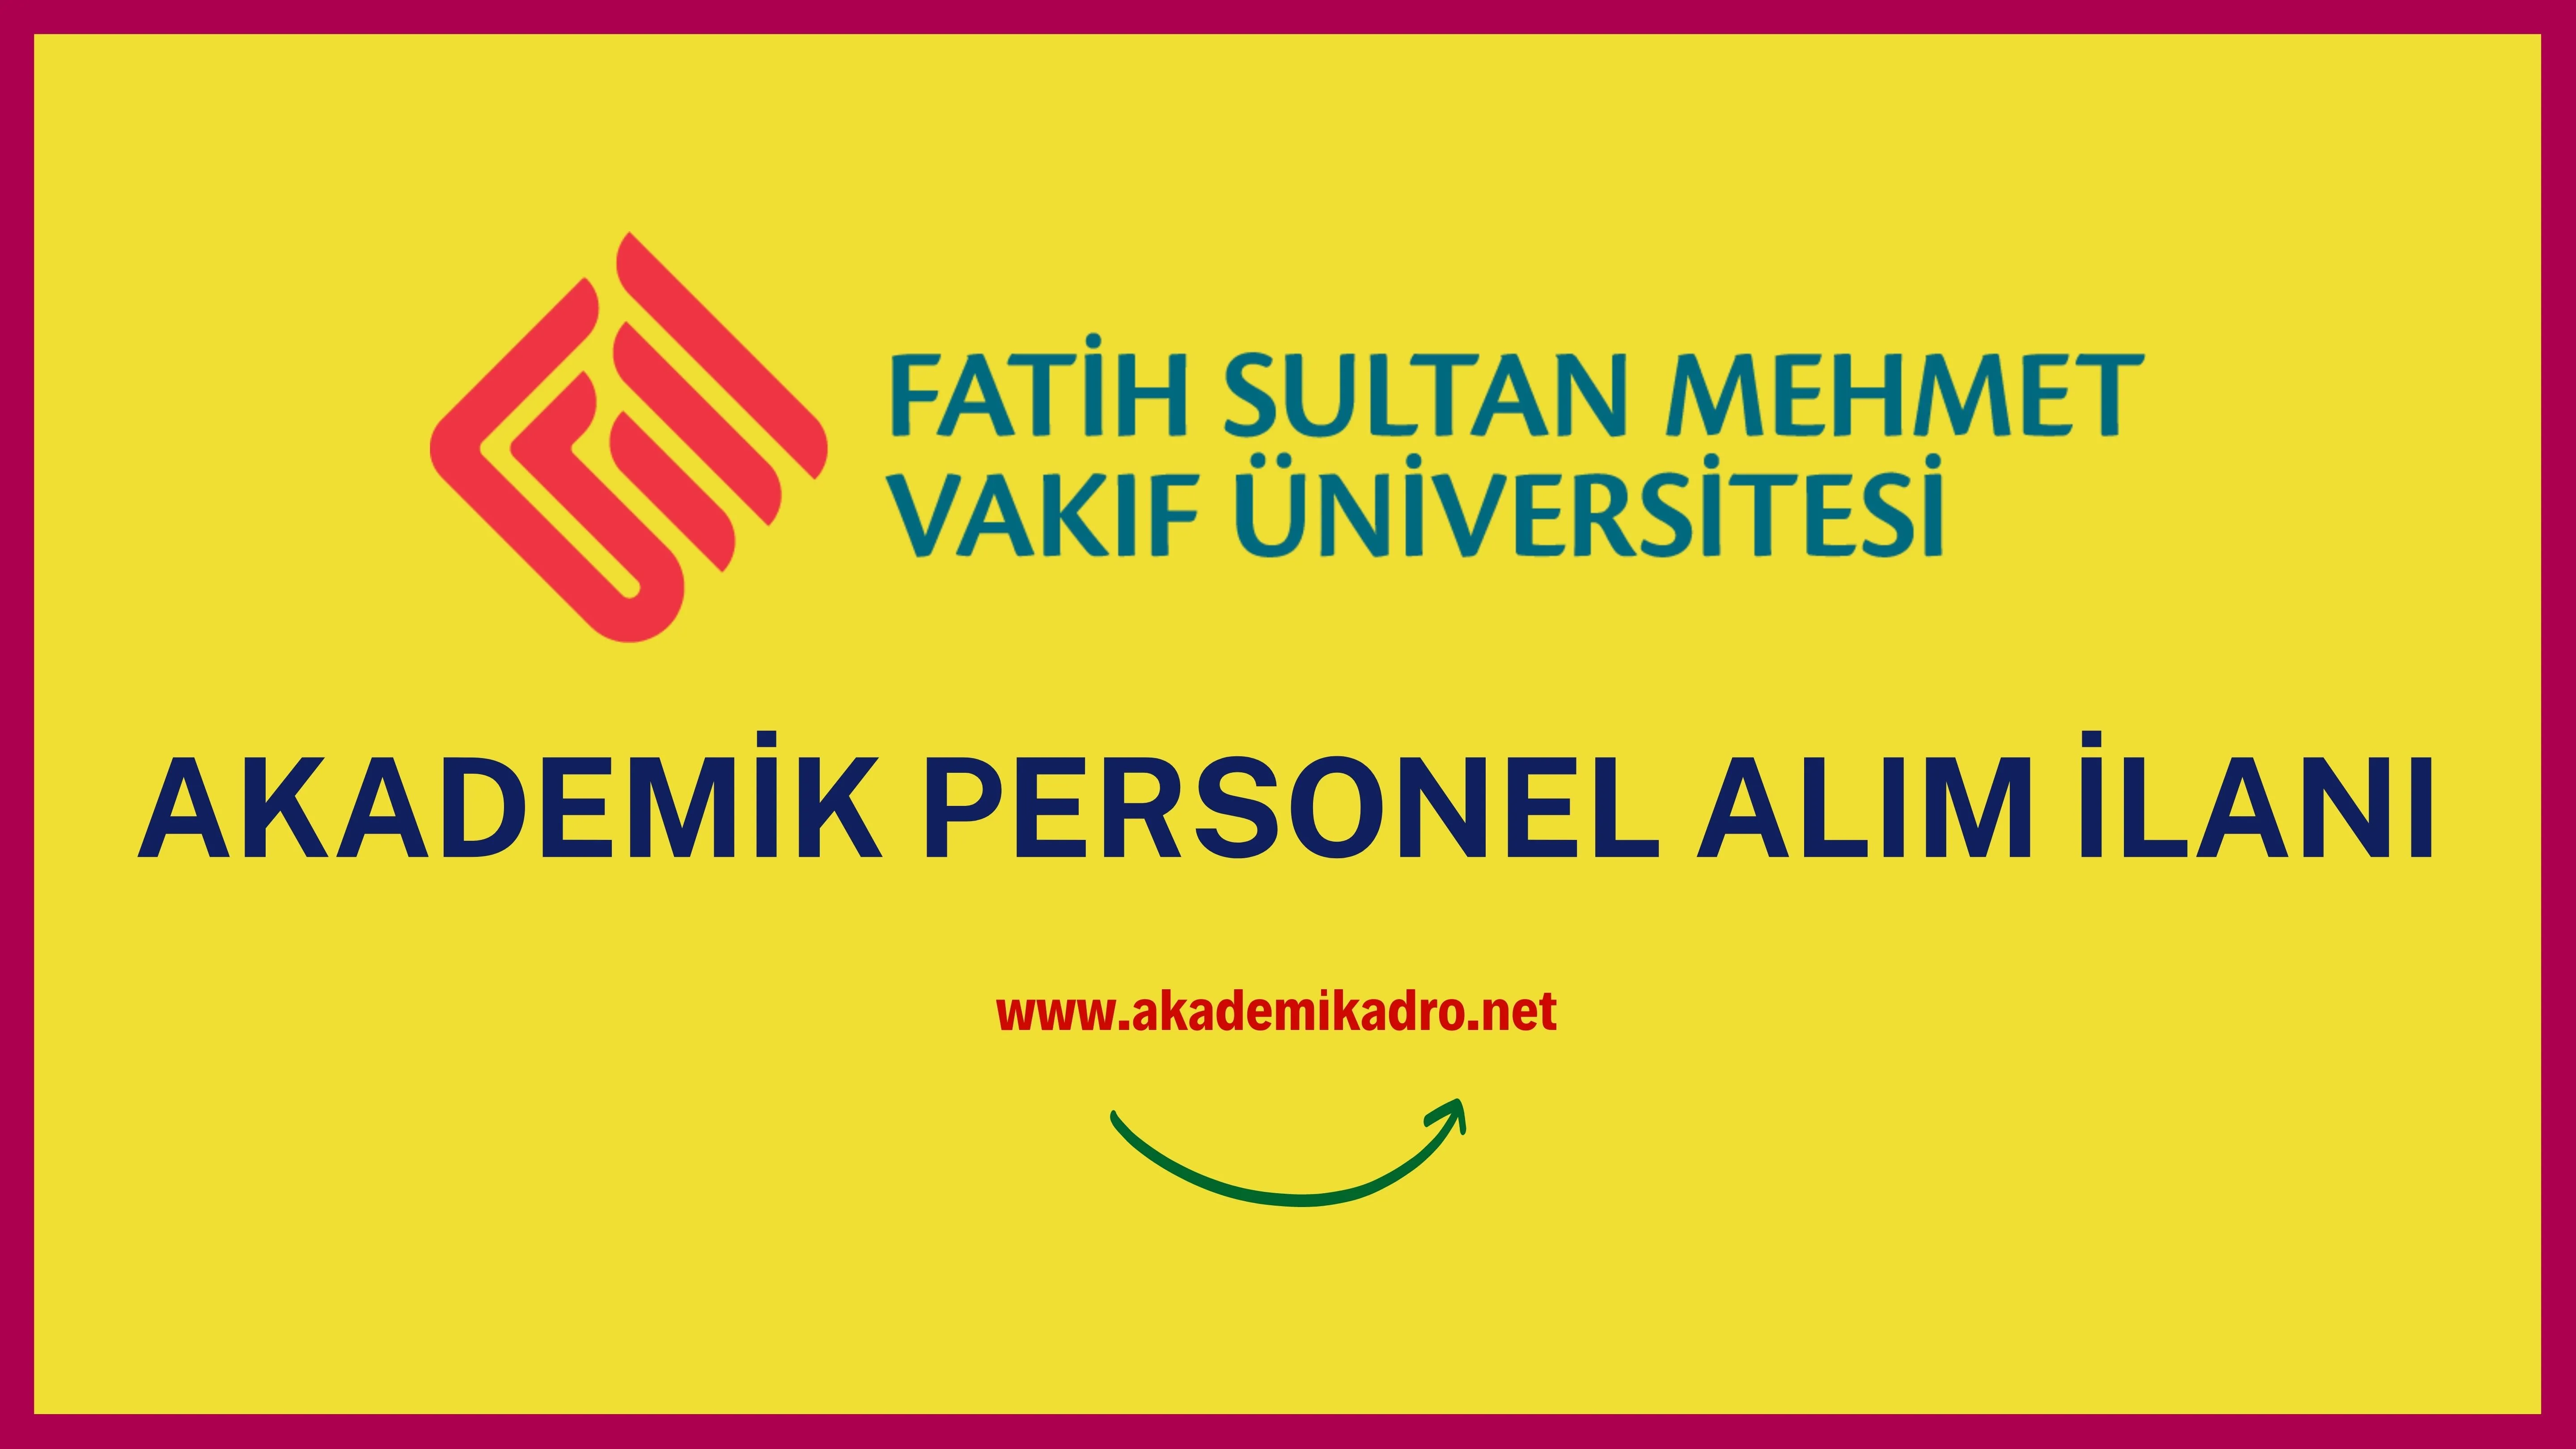 Fatih Sultan Mehmet Vakıf Üniversitesi akademik personel alacak.